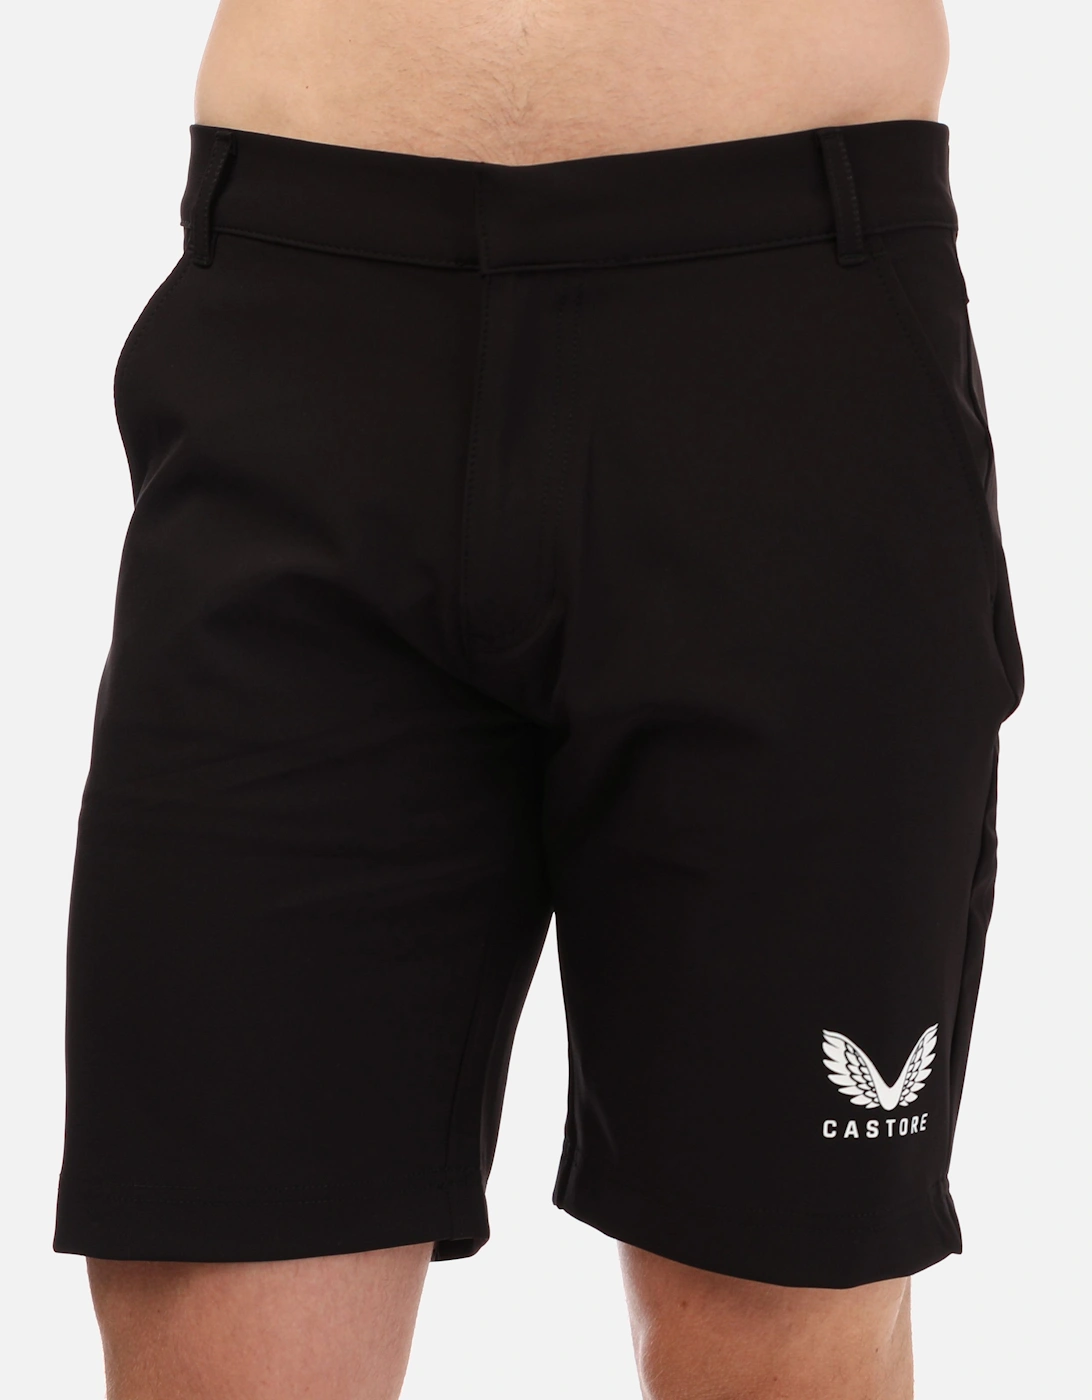 Men's Mens Chino Shorts - Black product